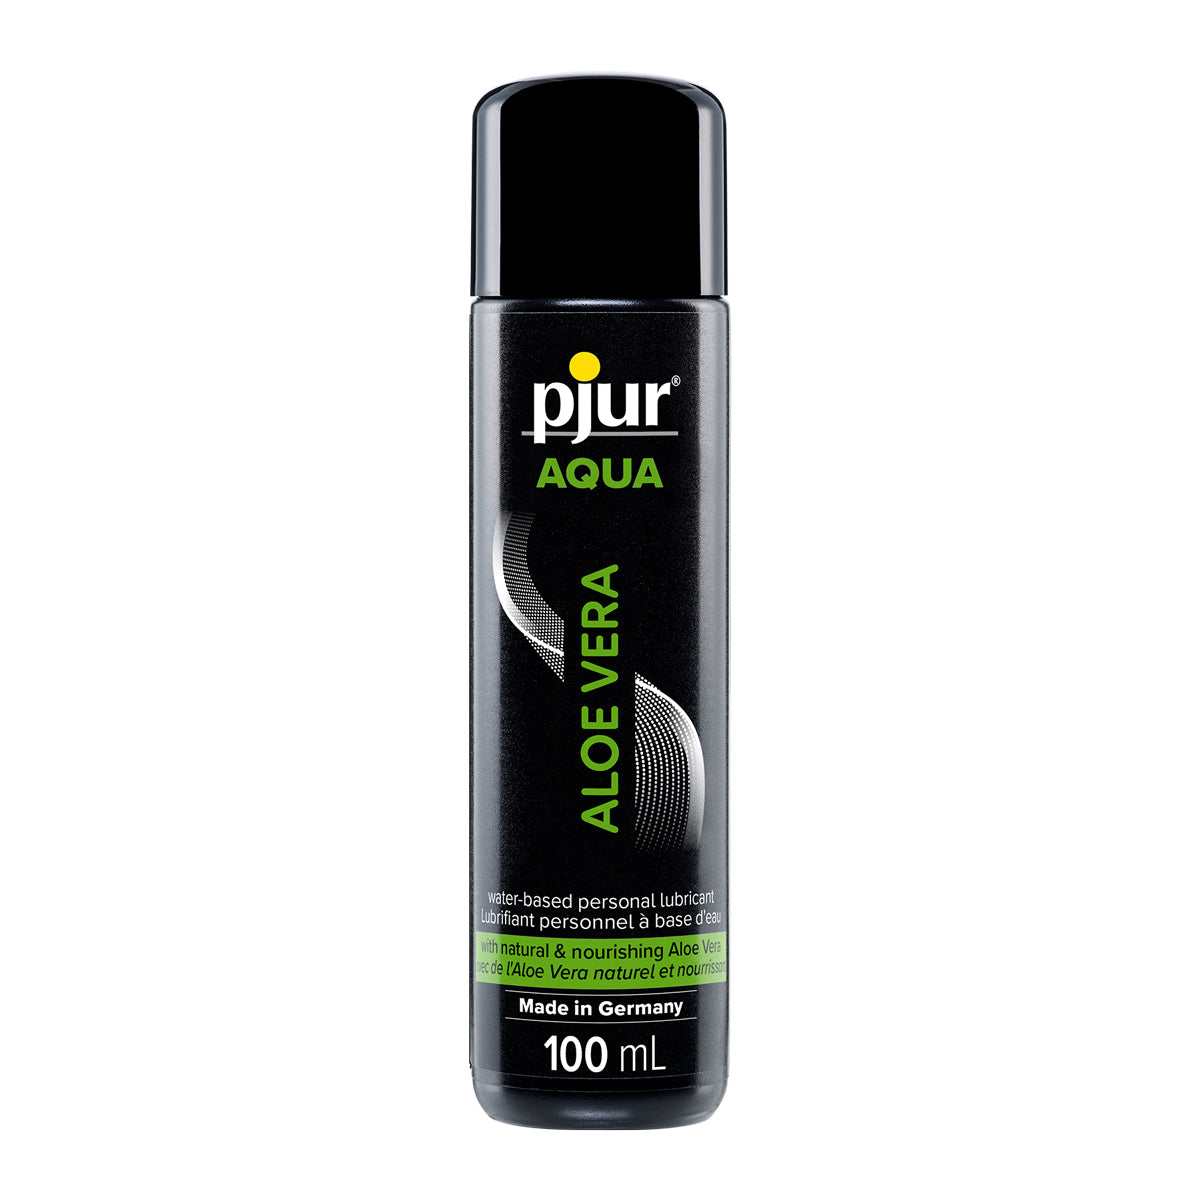 Pjur Aqua - Aloe Vera- Water Based Personal Lubricant - 100ml